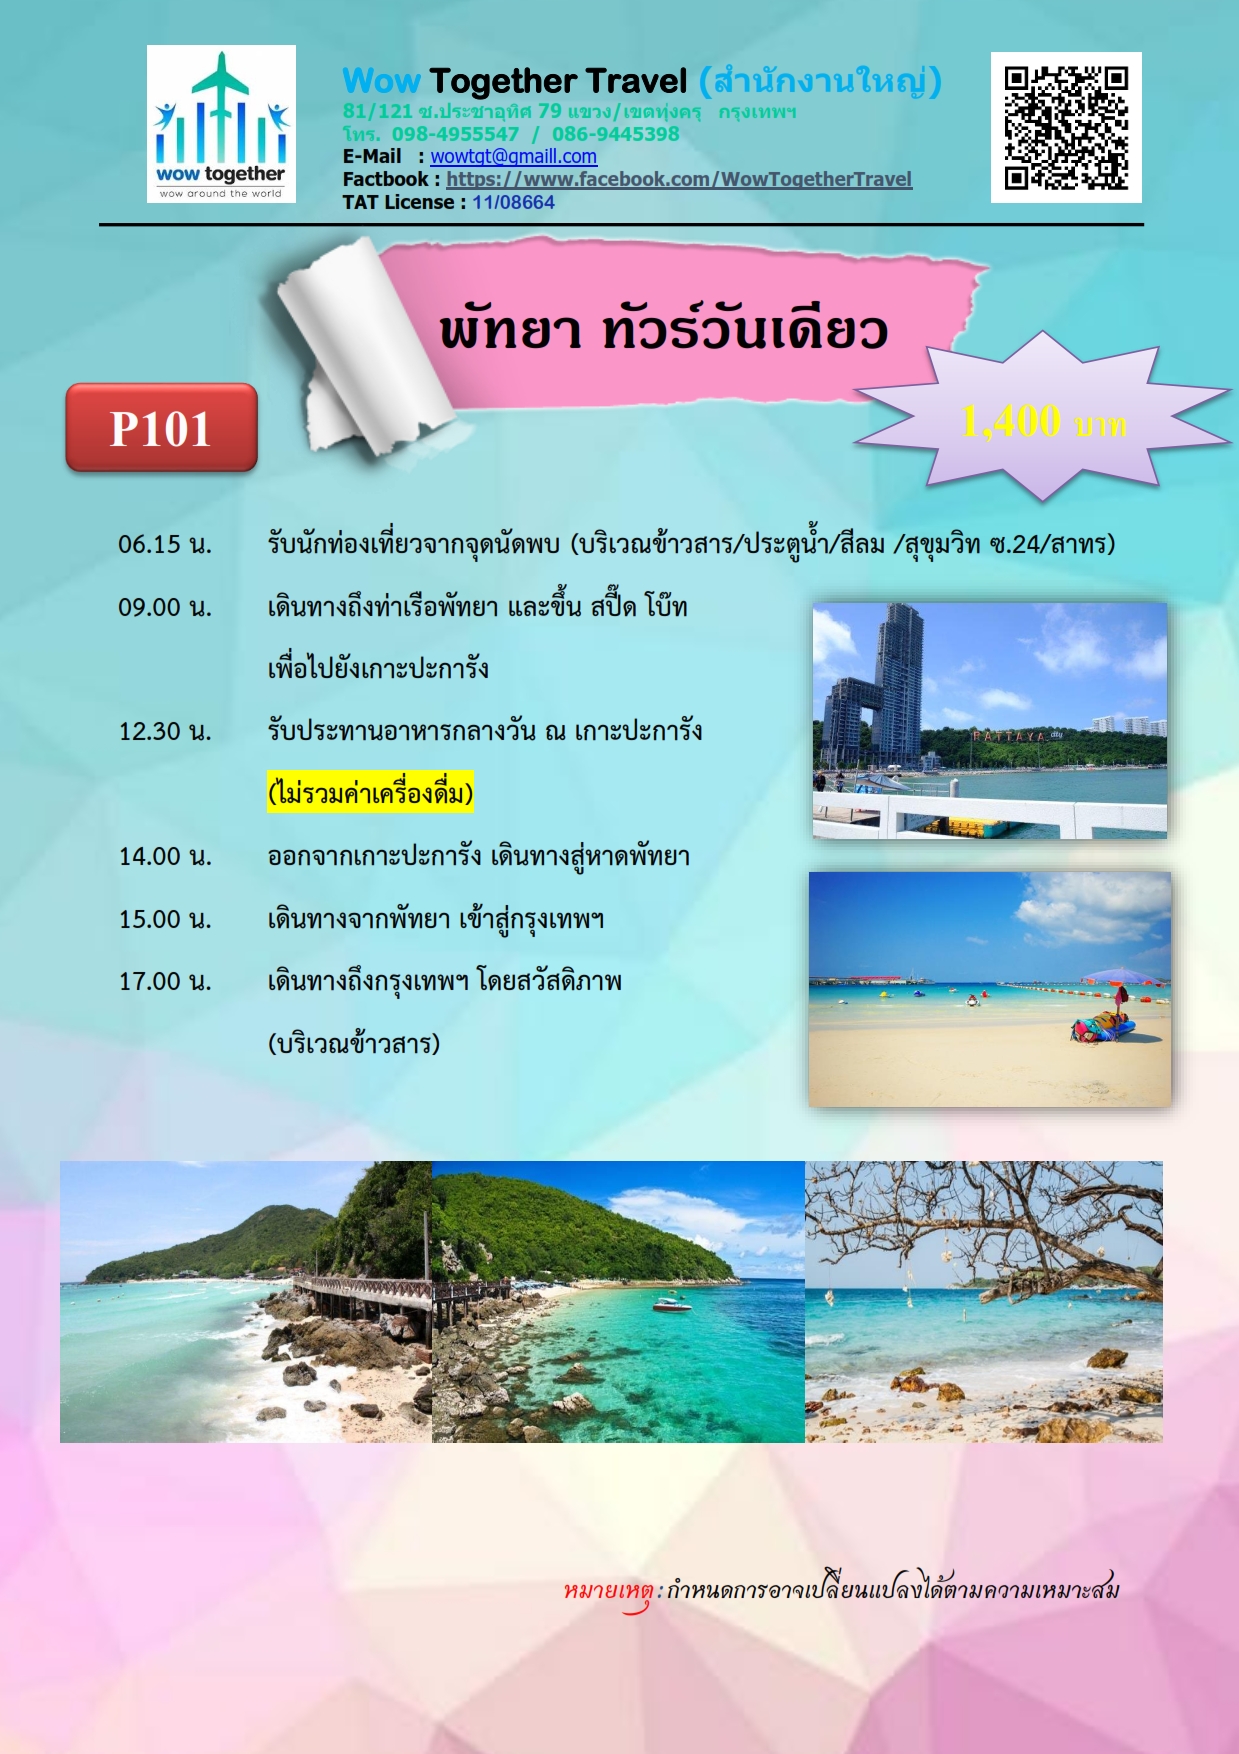 join tour พัทยา 1 day